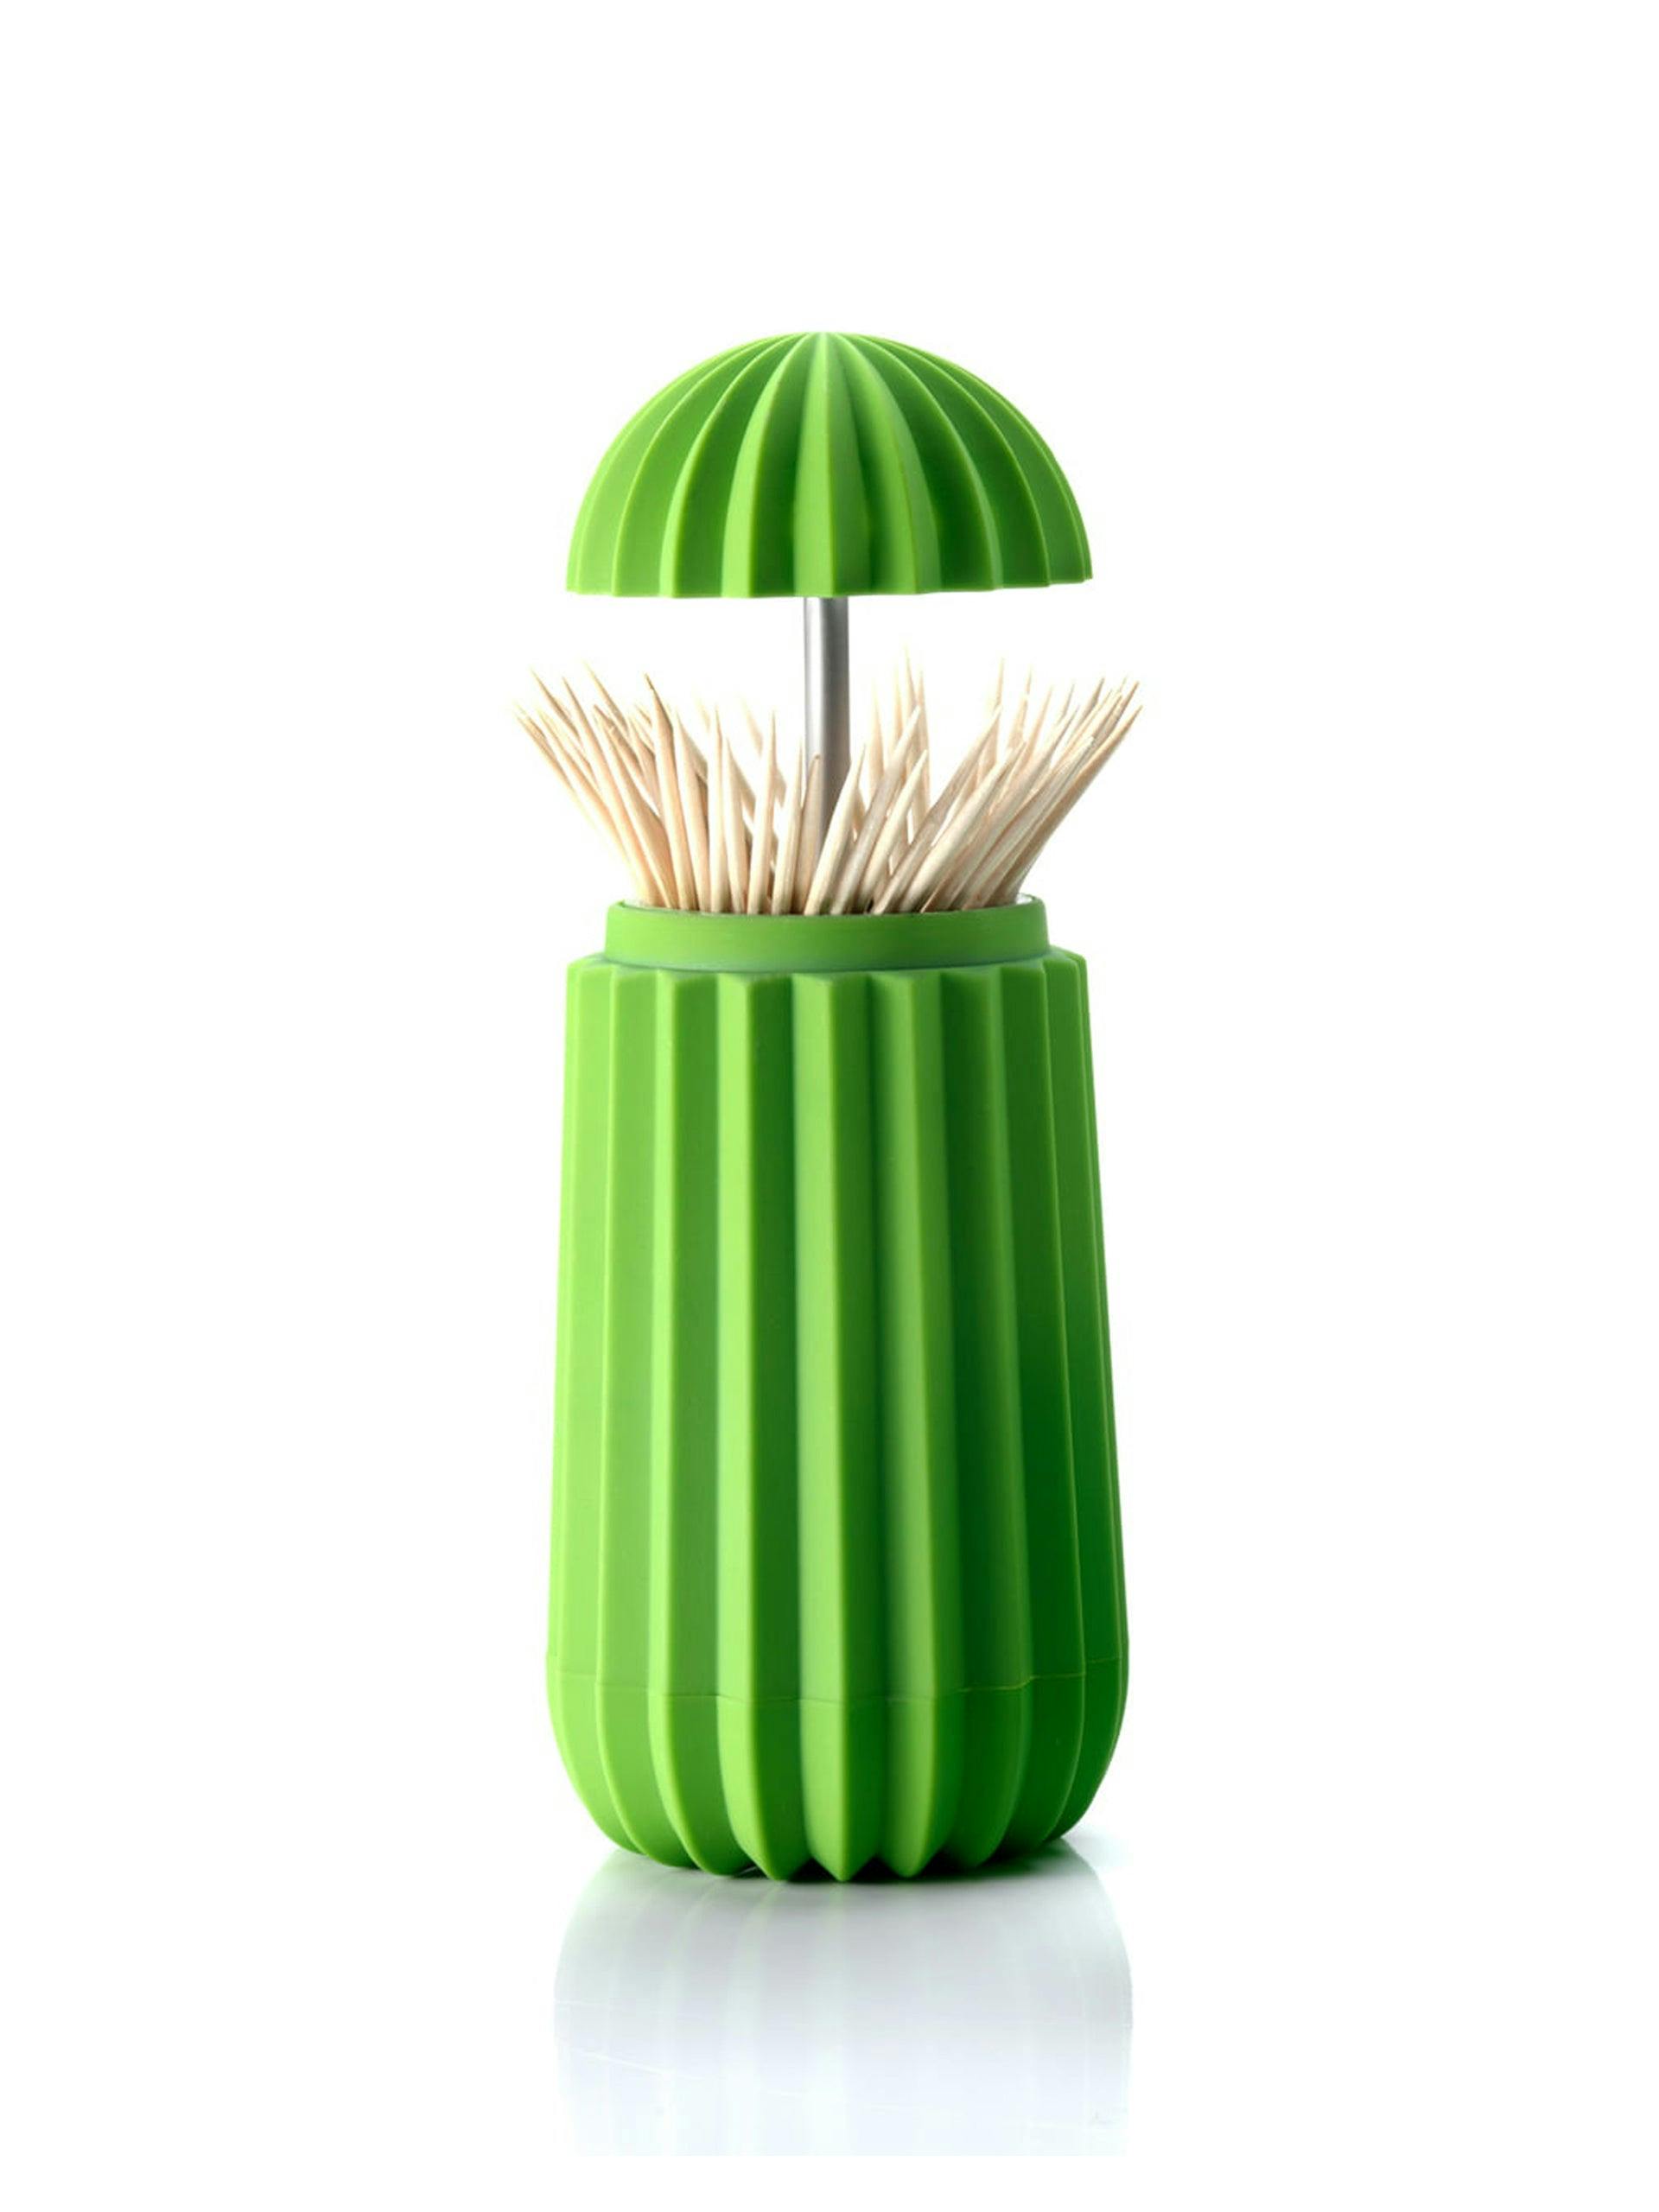 Cactus toothpick holder